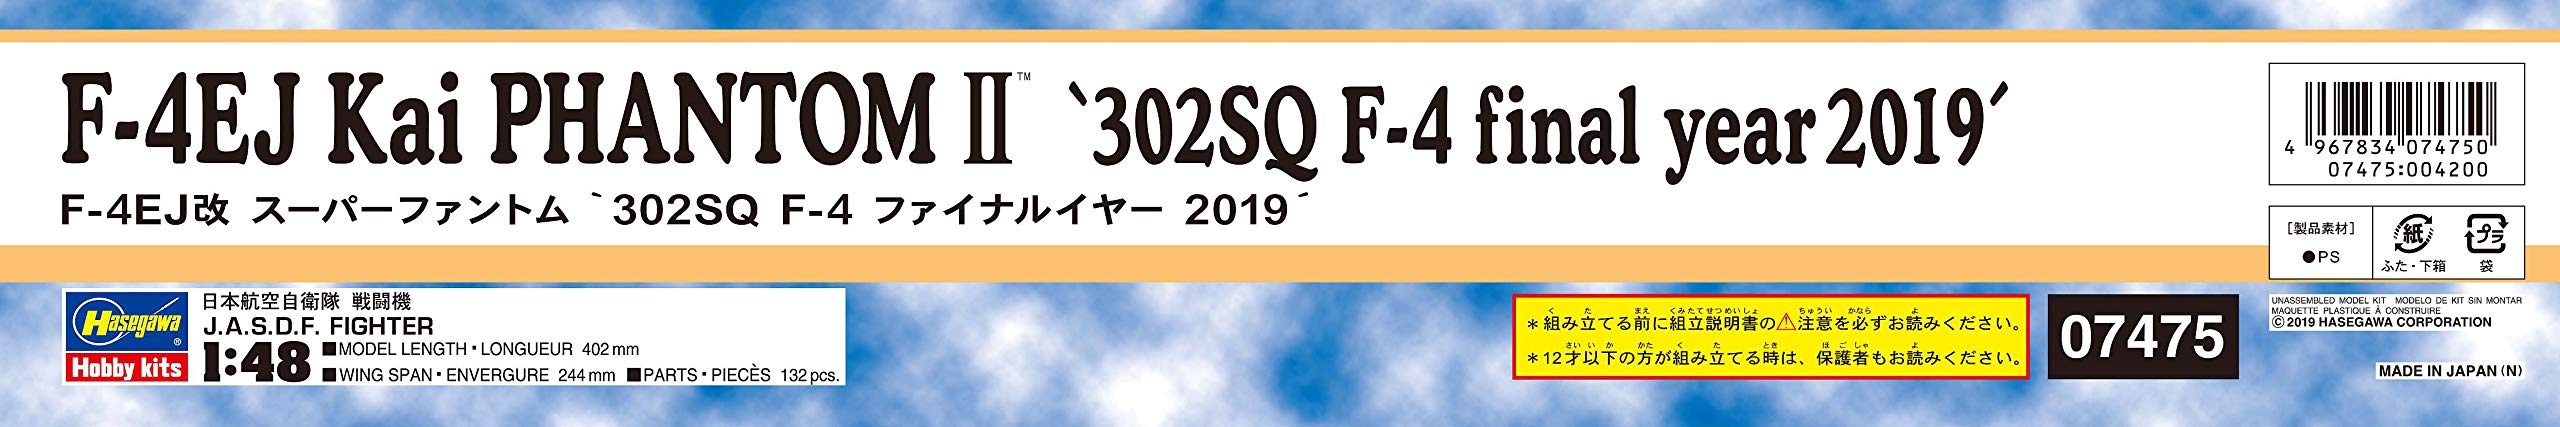 1/48 F-4EJ Kai Super Phantom '302SQ F-4 Final Year 2019' Plastic Model Kit 07475_3